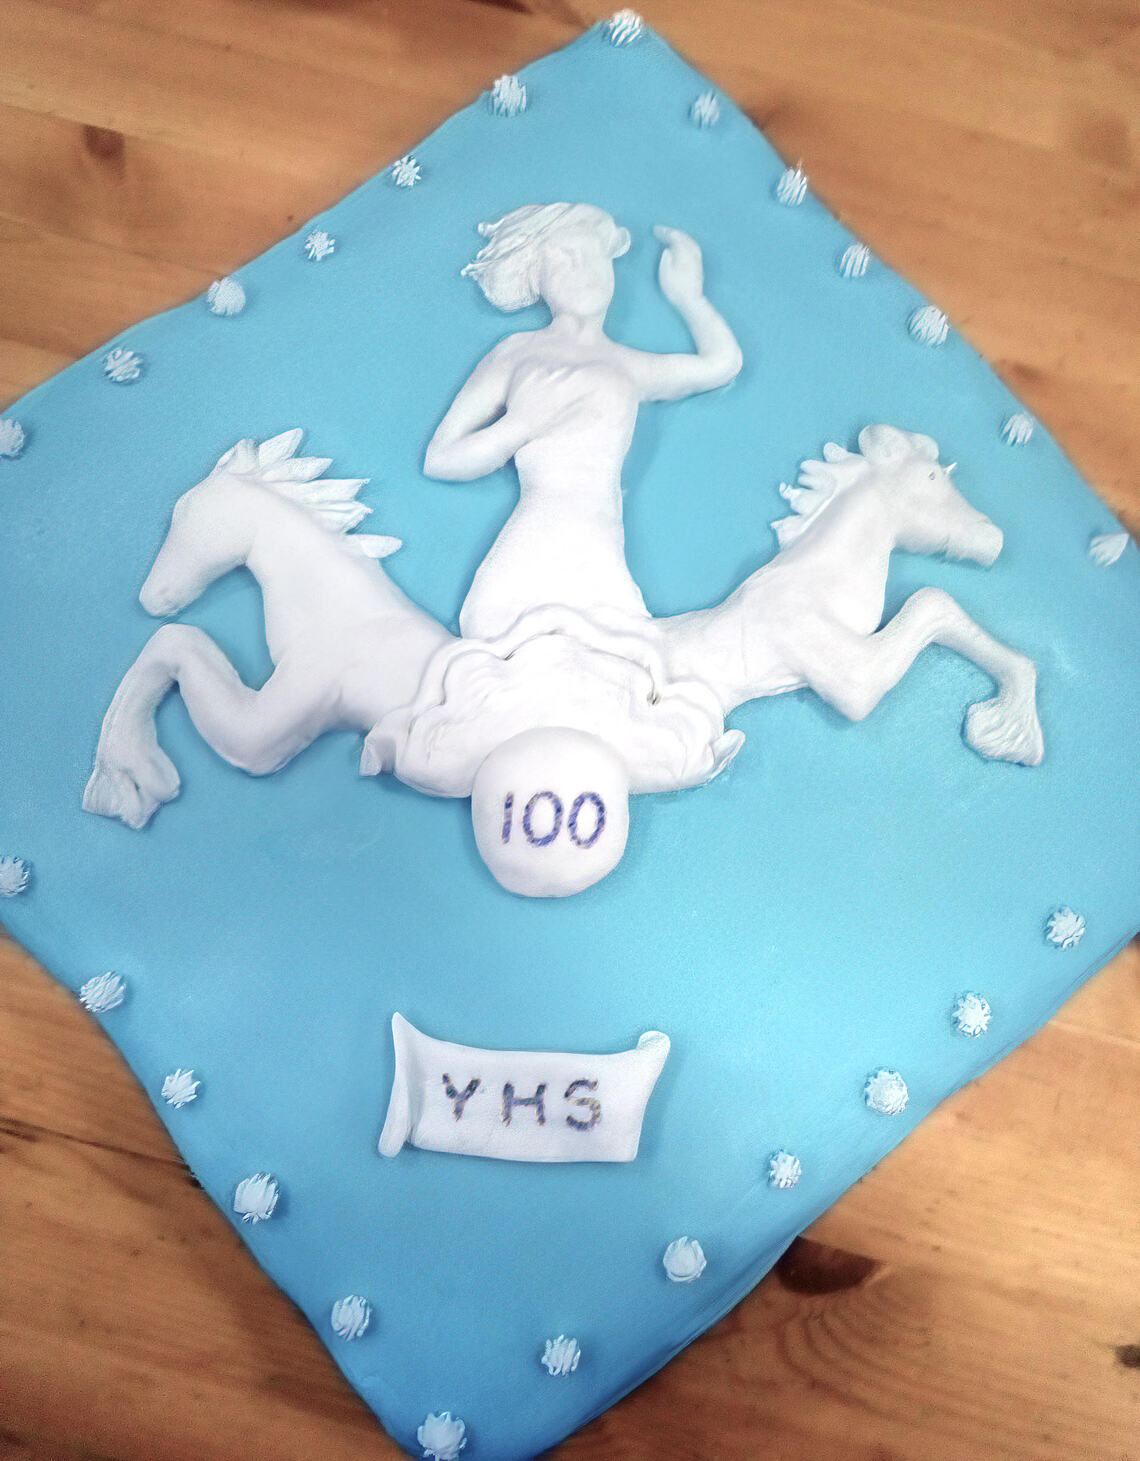 100 yr York House cake celebration